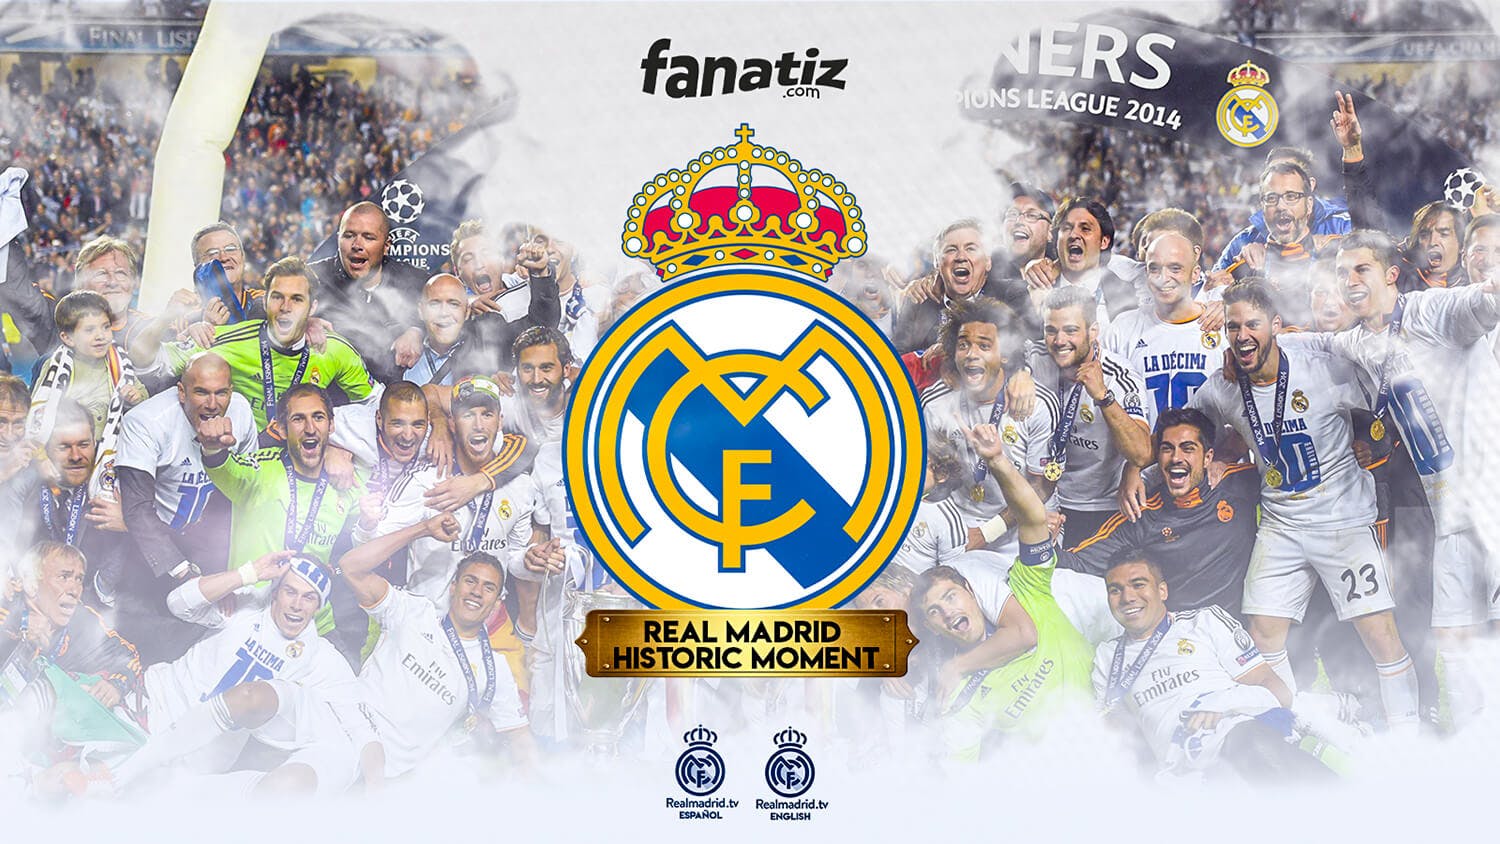 Real Madrid classic matches on Fanatiz